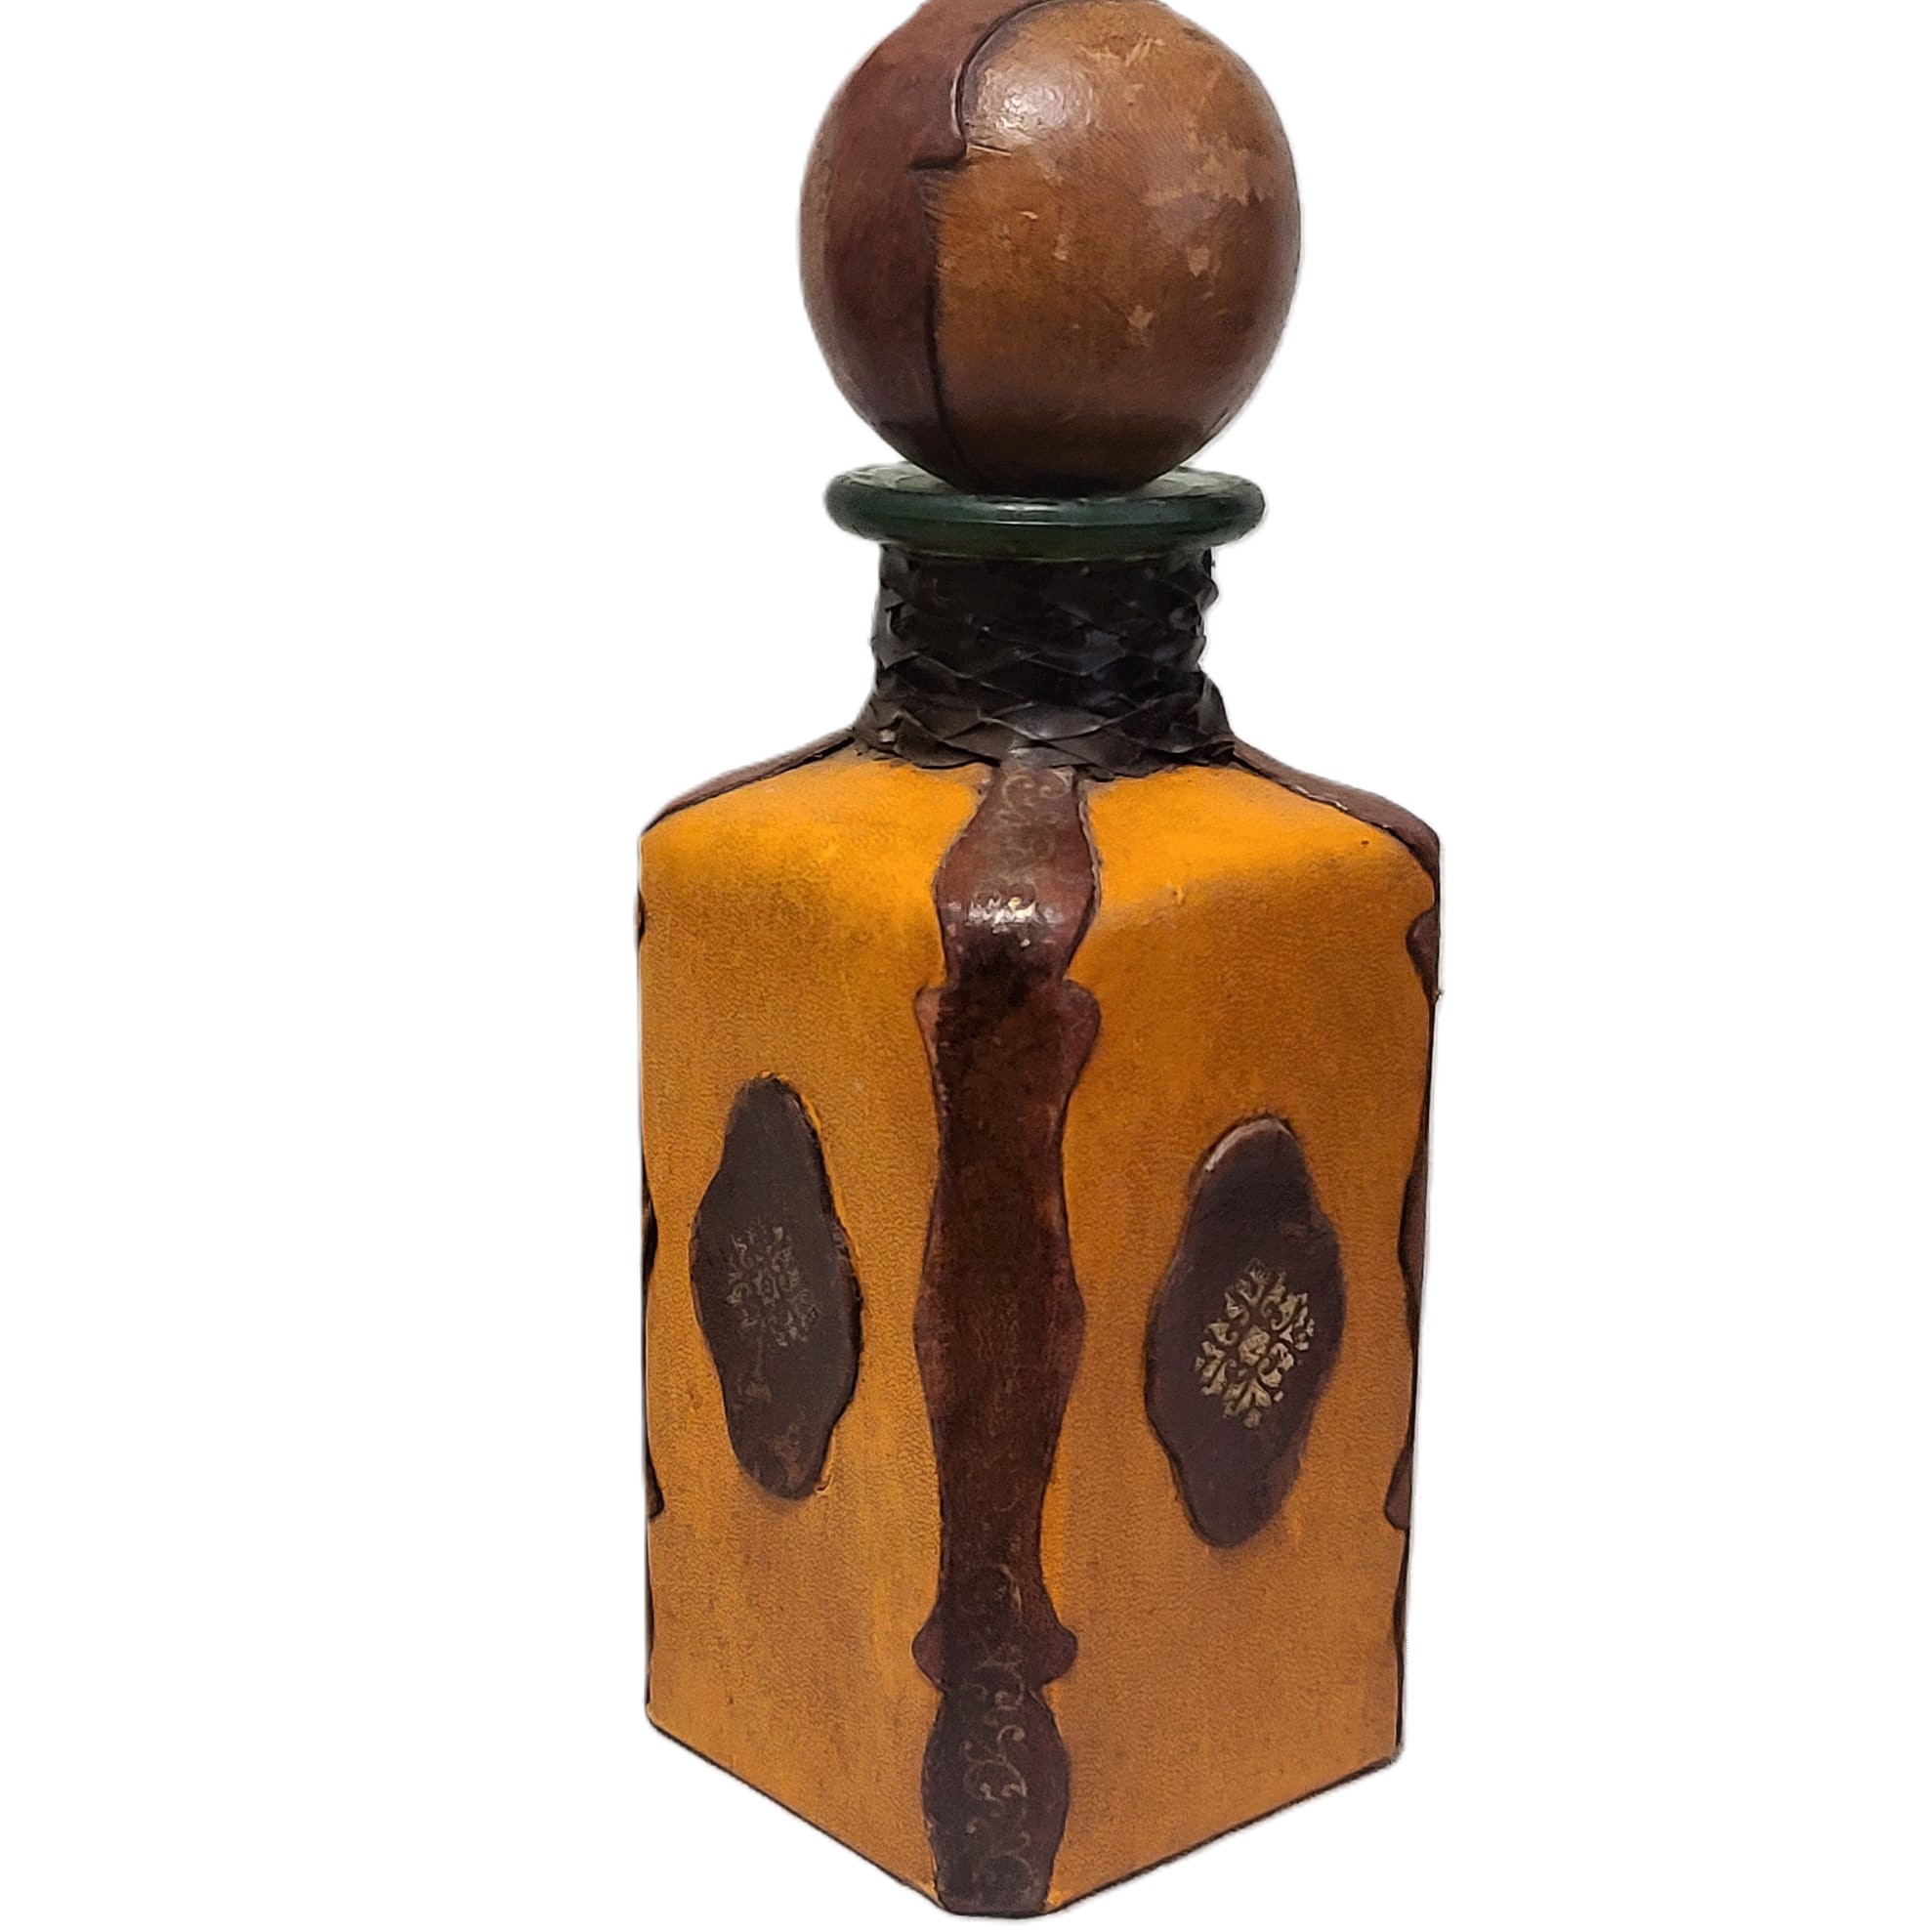 Vintage Italian leather covered wine bottle, liquor decantor